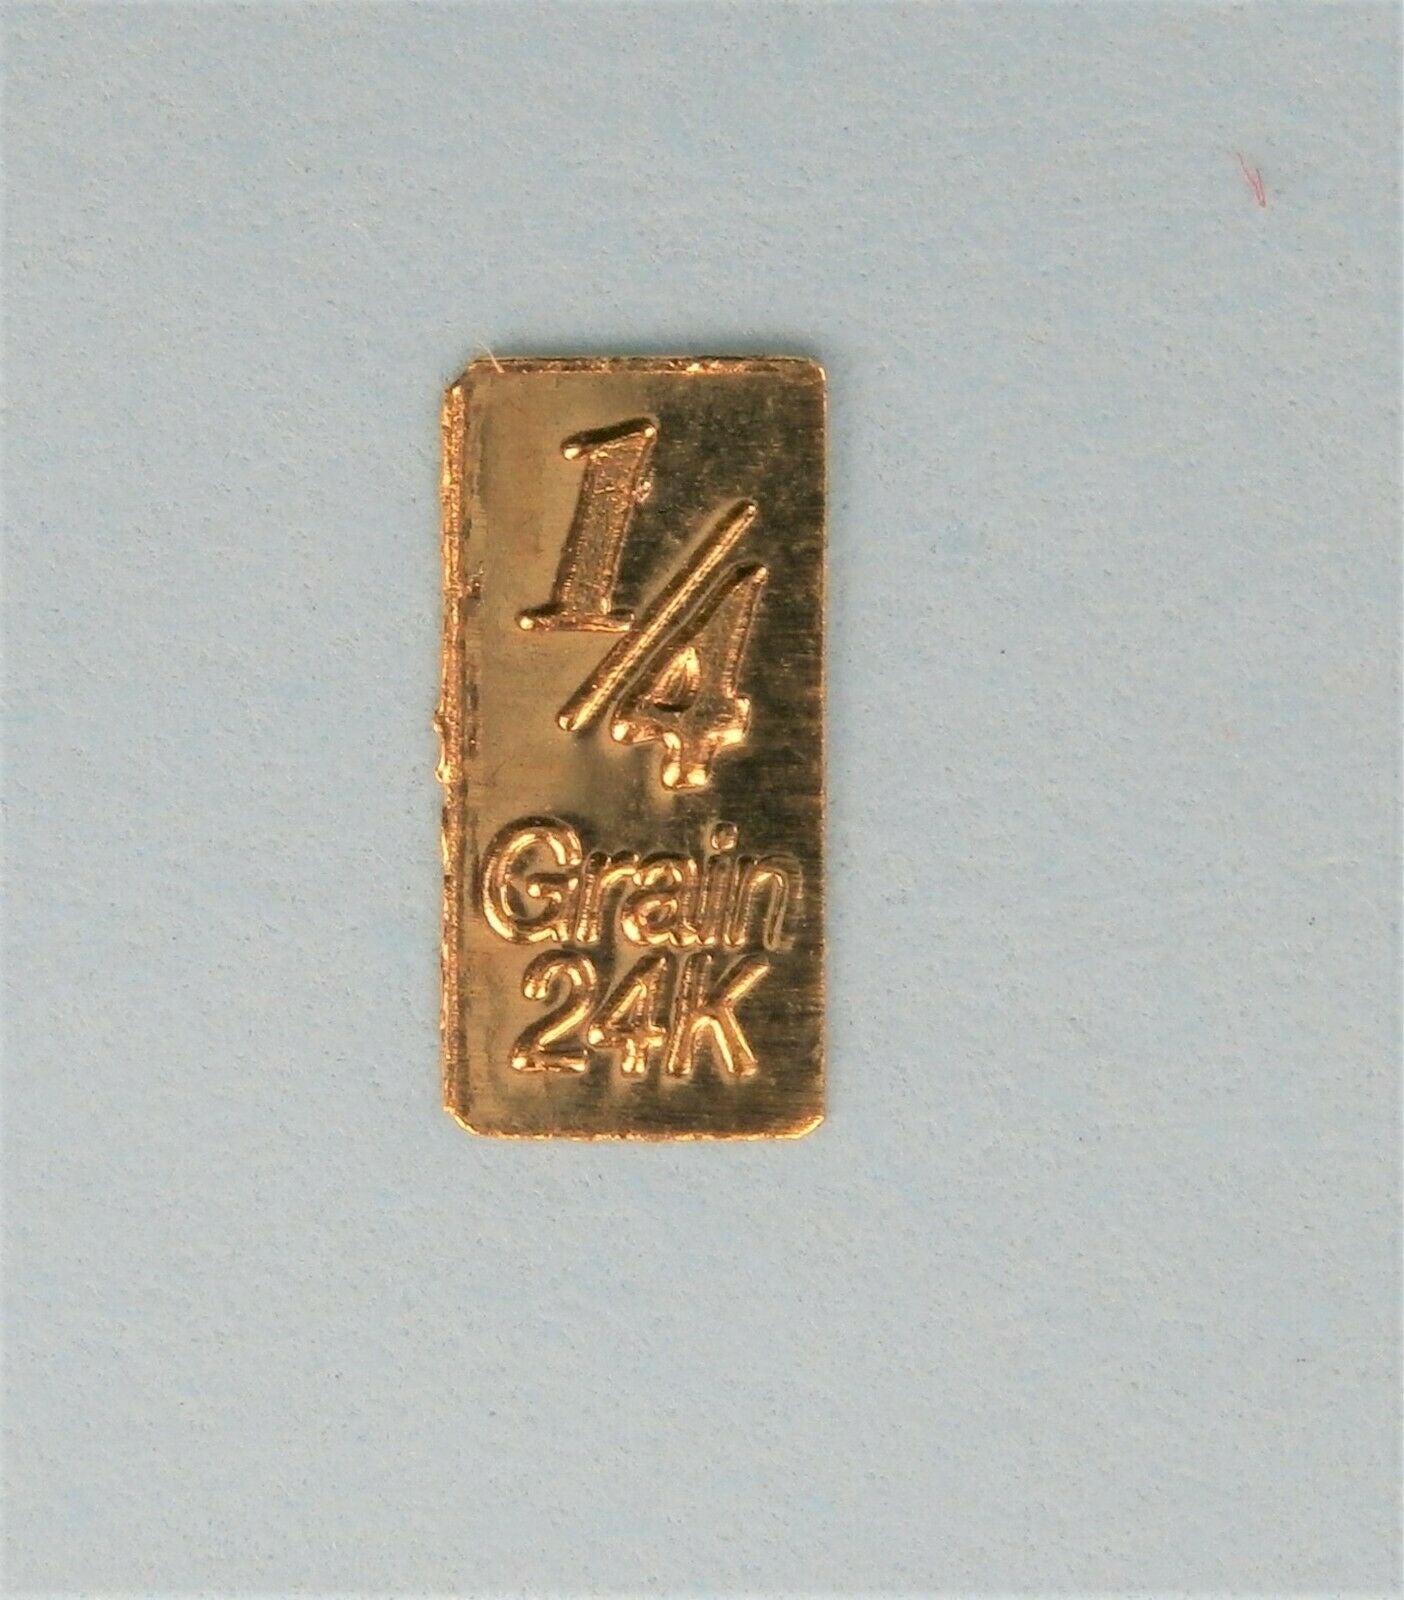 1/4 GRAIN .9999 FINE 24K GOLD BULLION BAR “9/11 NEVER FORGET” - IN COA CARD